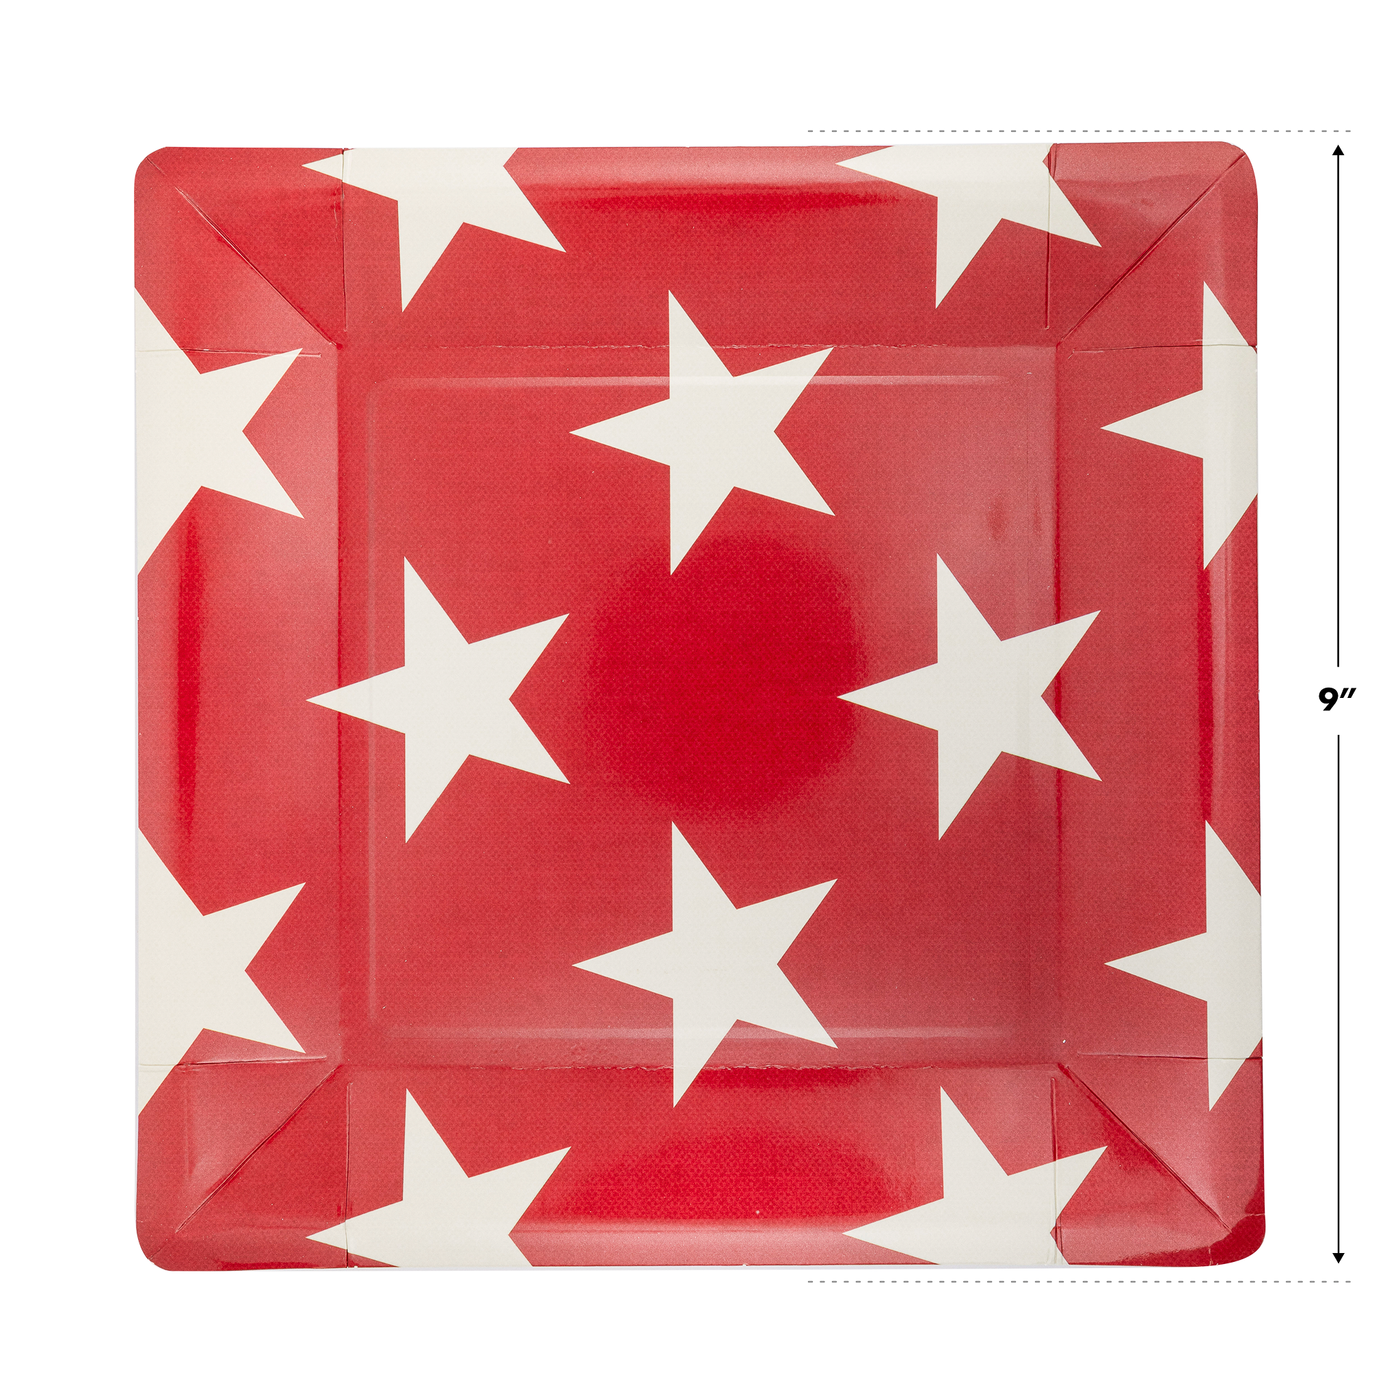 HAM1041 - Hamptons Square Red Star Paper Plate